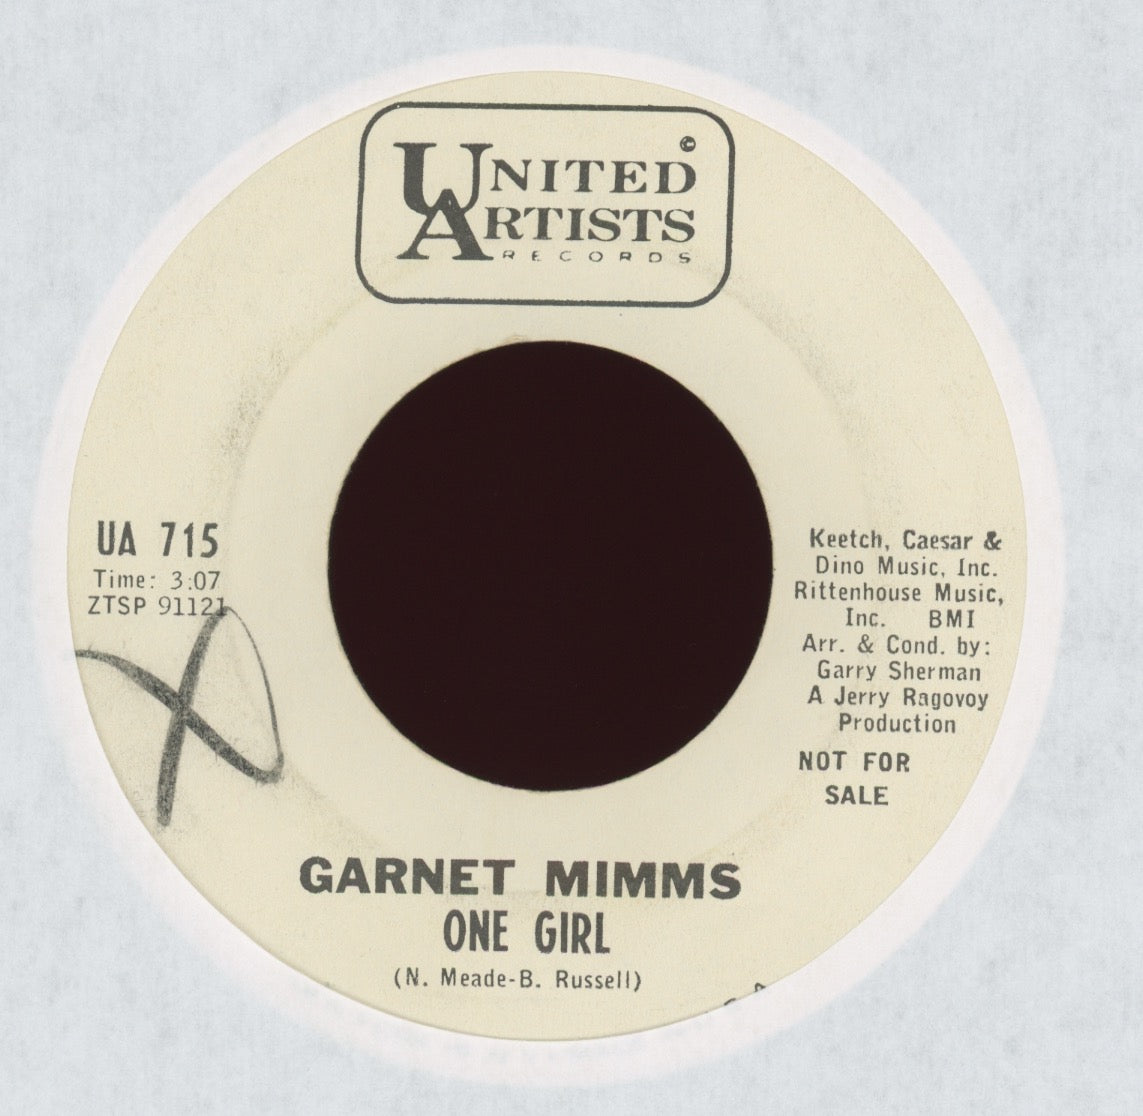 Garnet Mimms - A Quiet Place on UA Promo